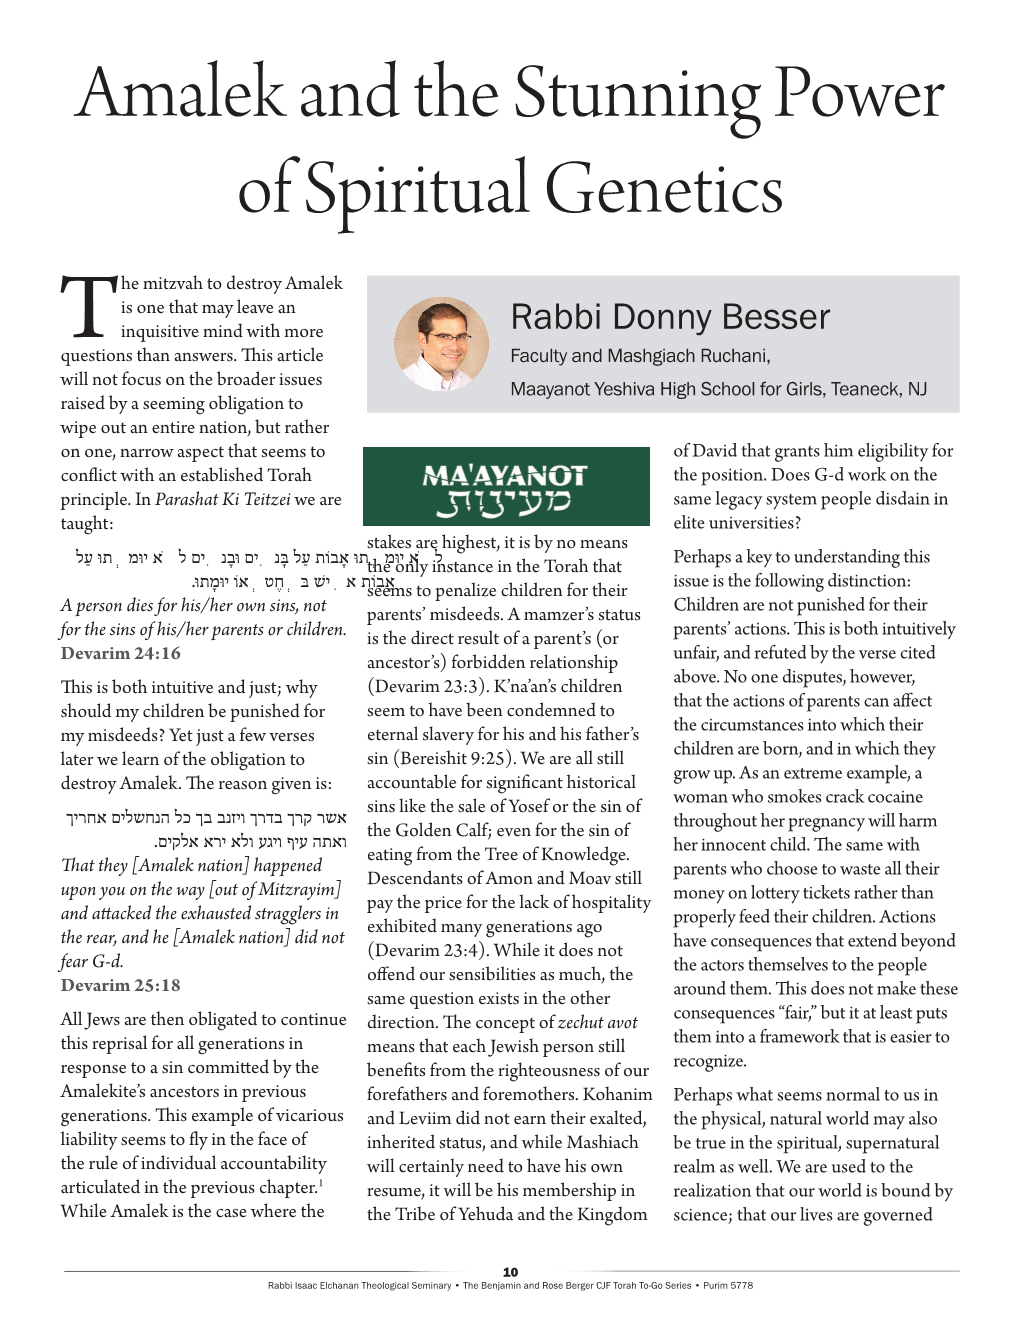 Amalek and the Stunning Power of Spiritual Genetics